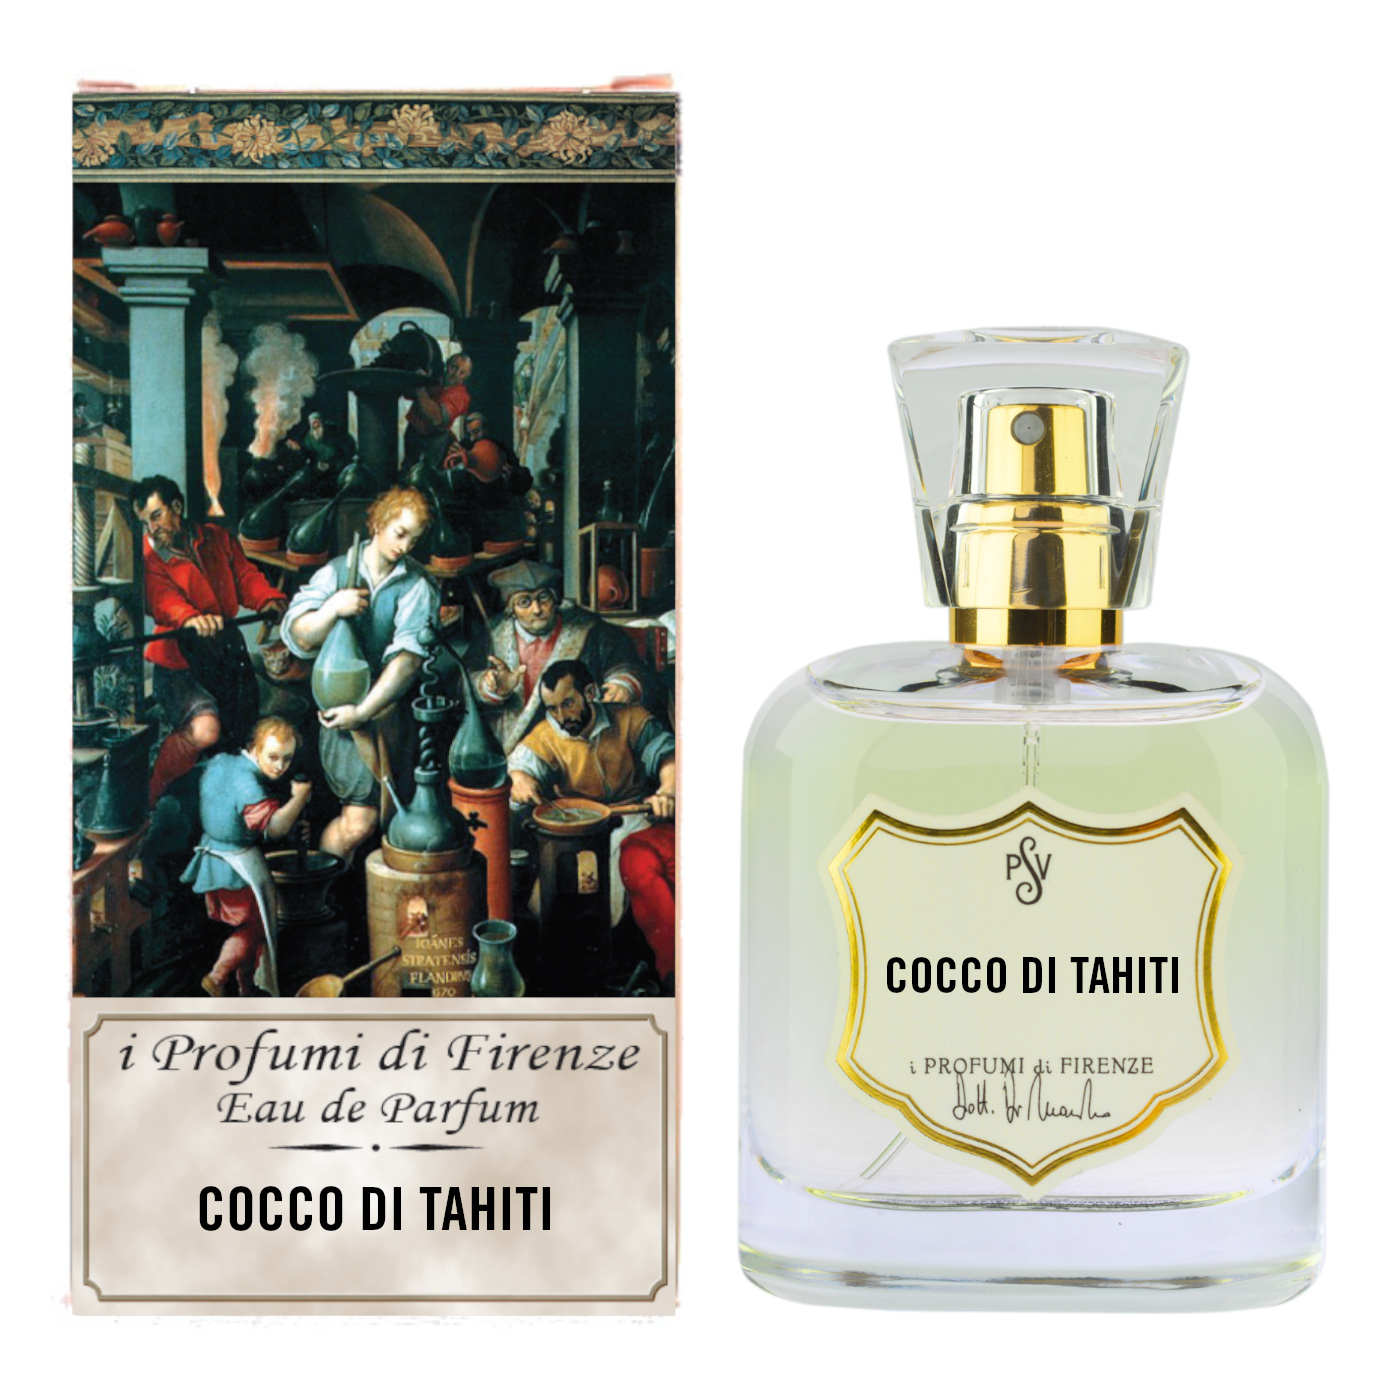 COCCO DI TAHITI - Eau de Parfum - Spezierie Palazzo Vecchio